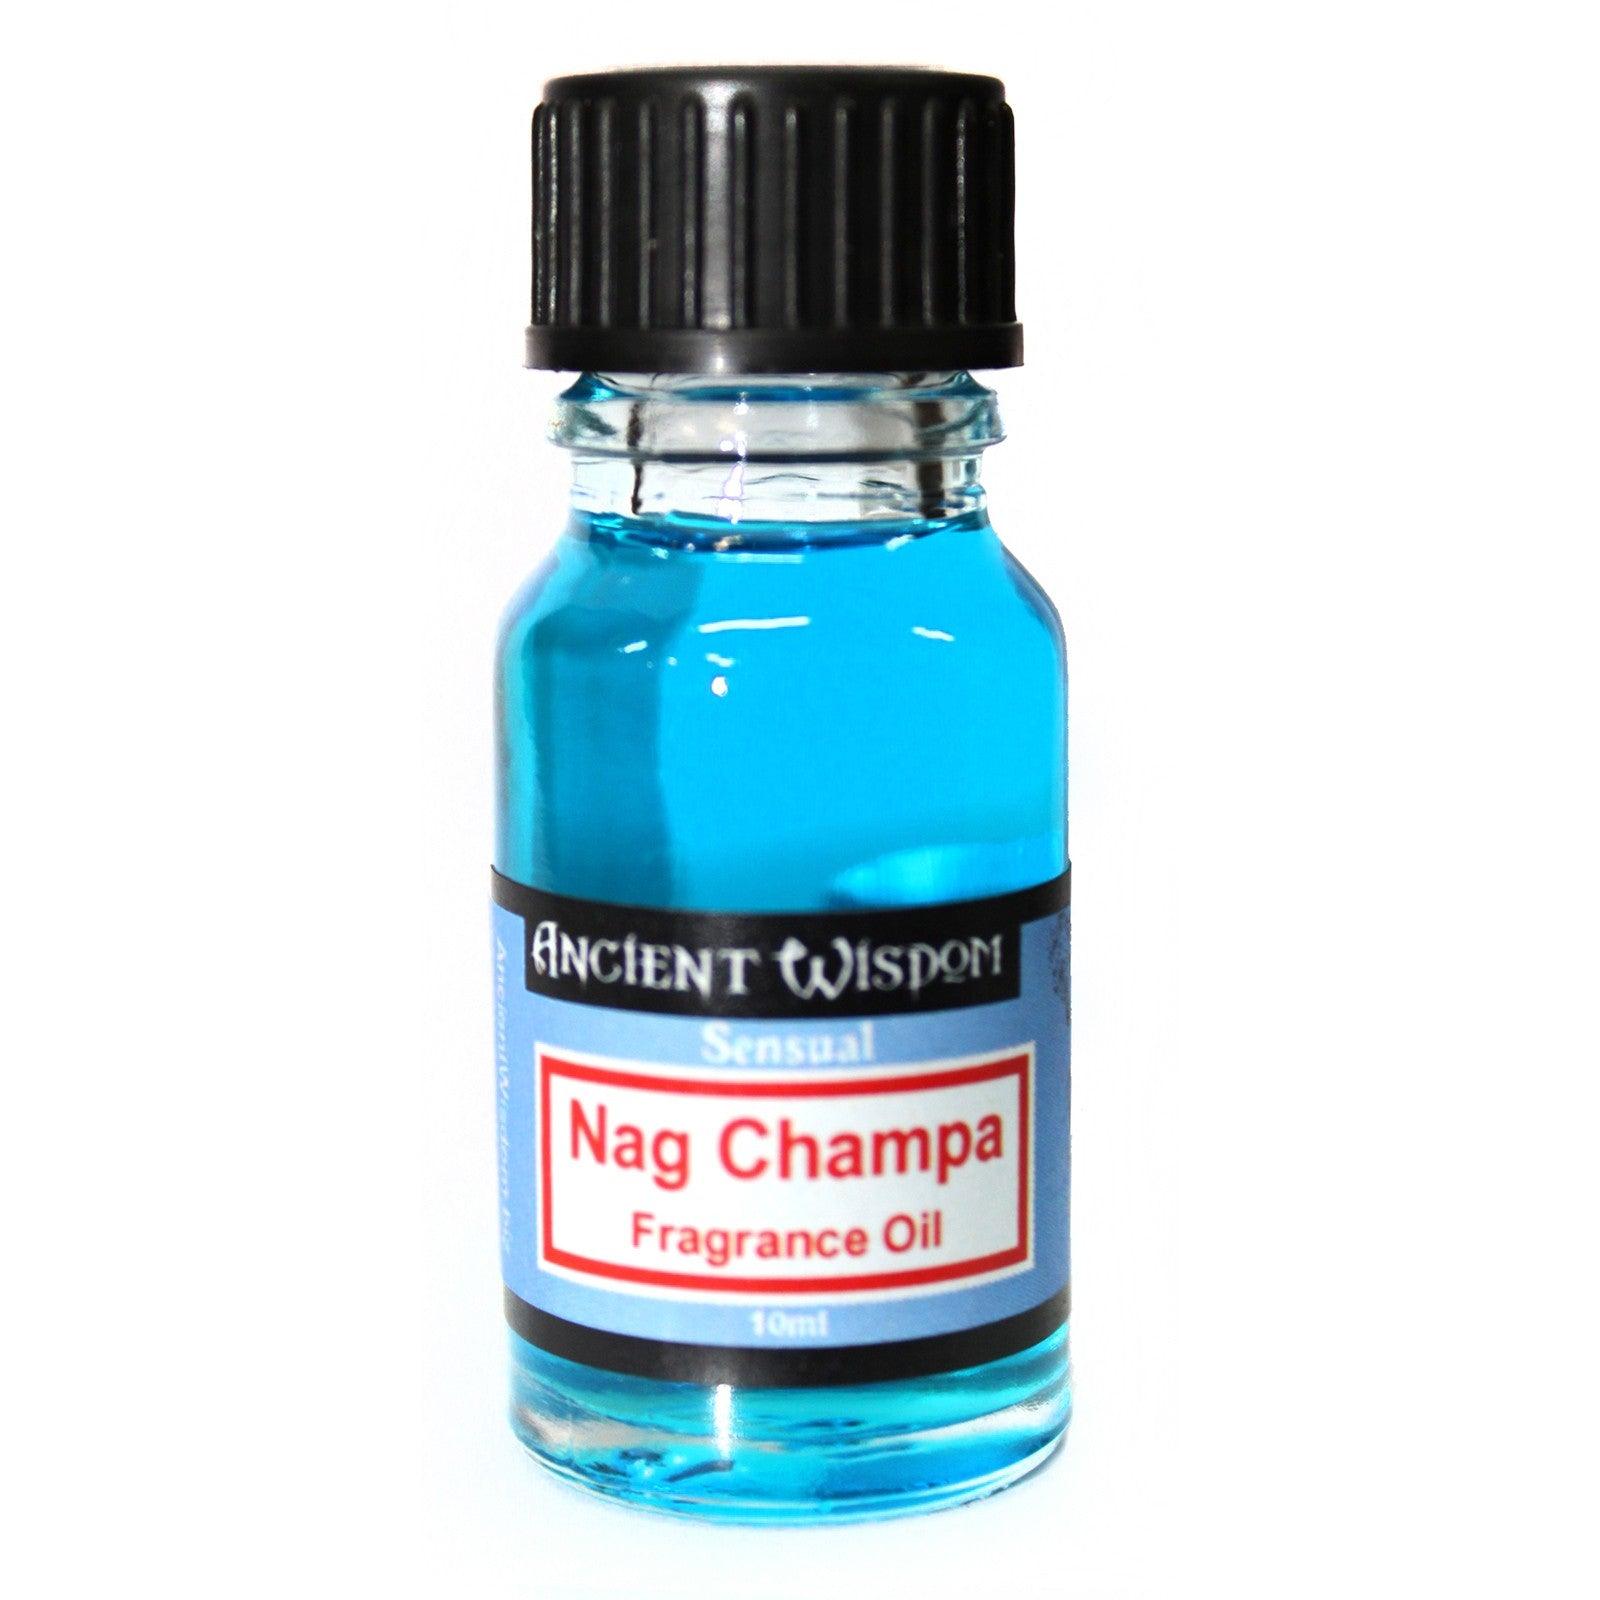 10ml Nag Champa Fragrance Oil - Charming Spaces